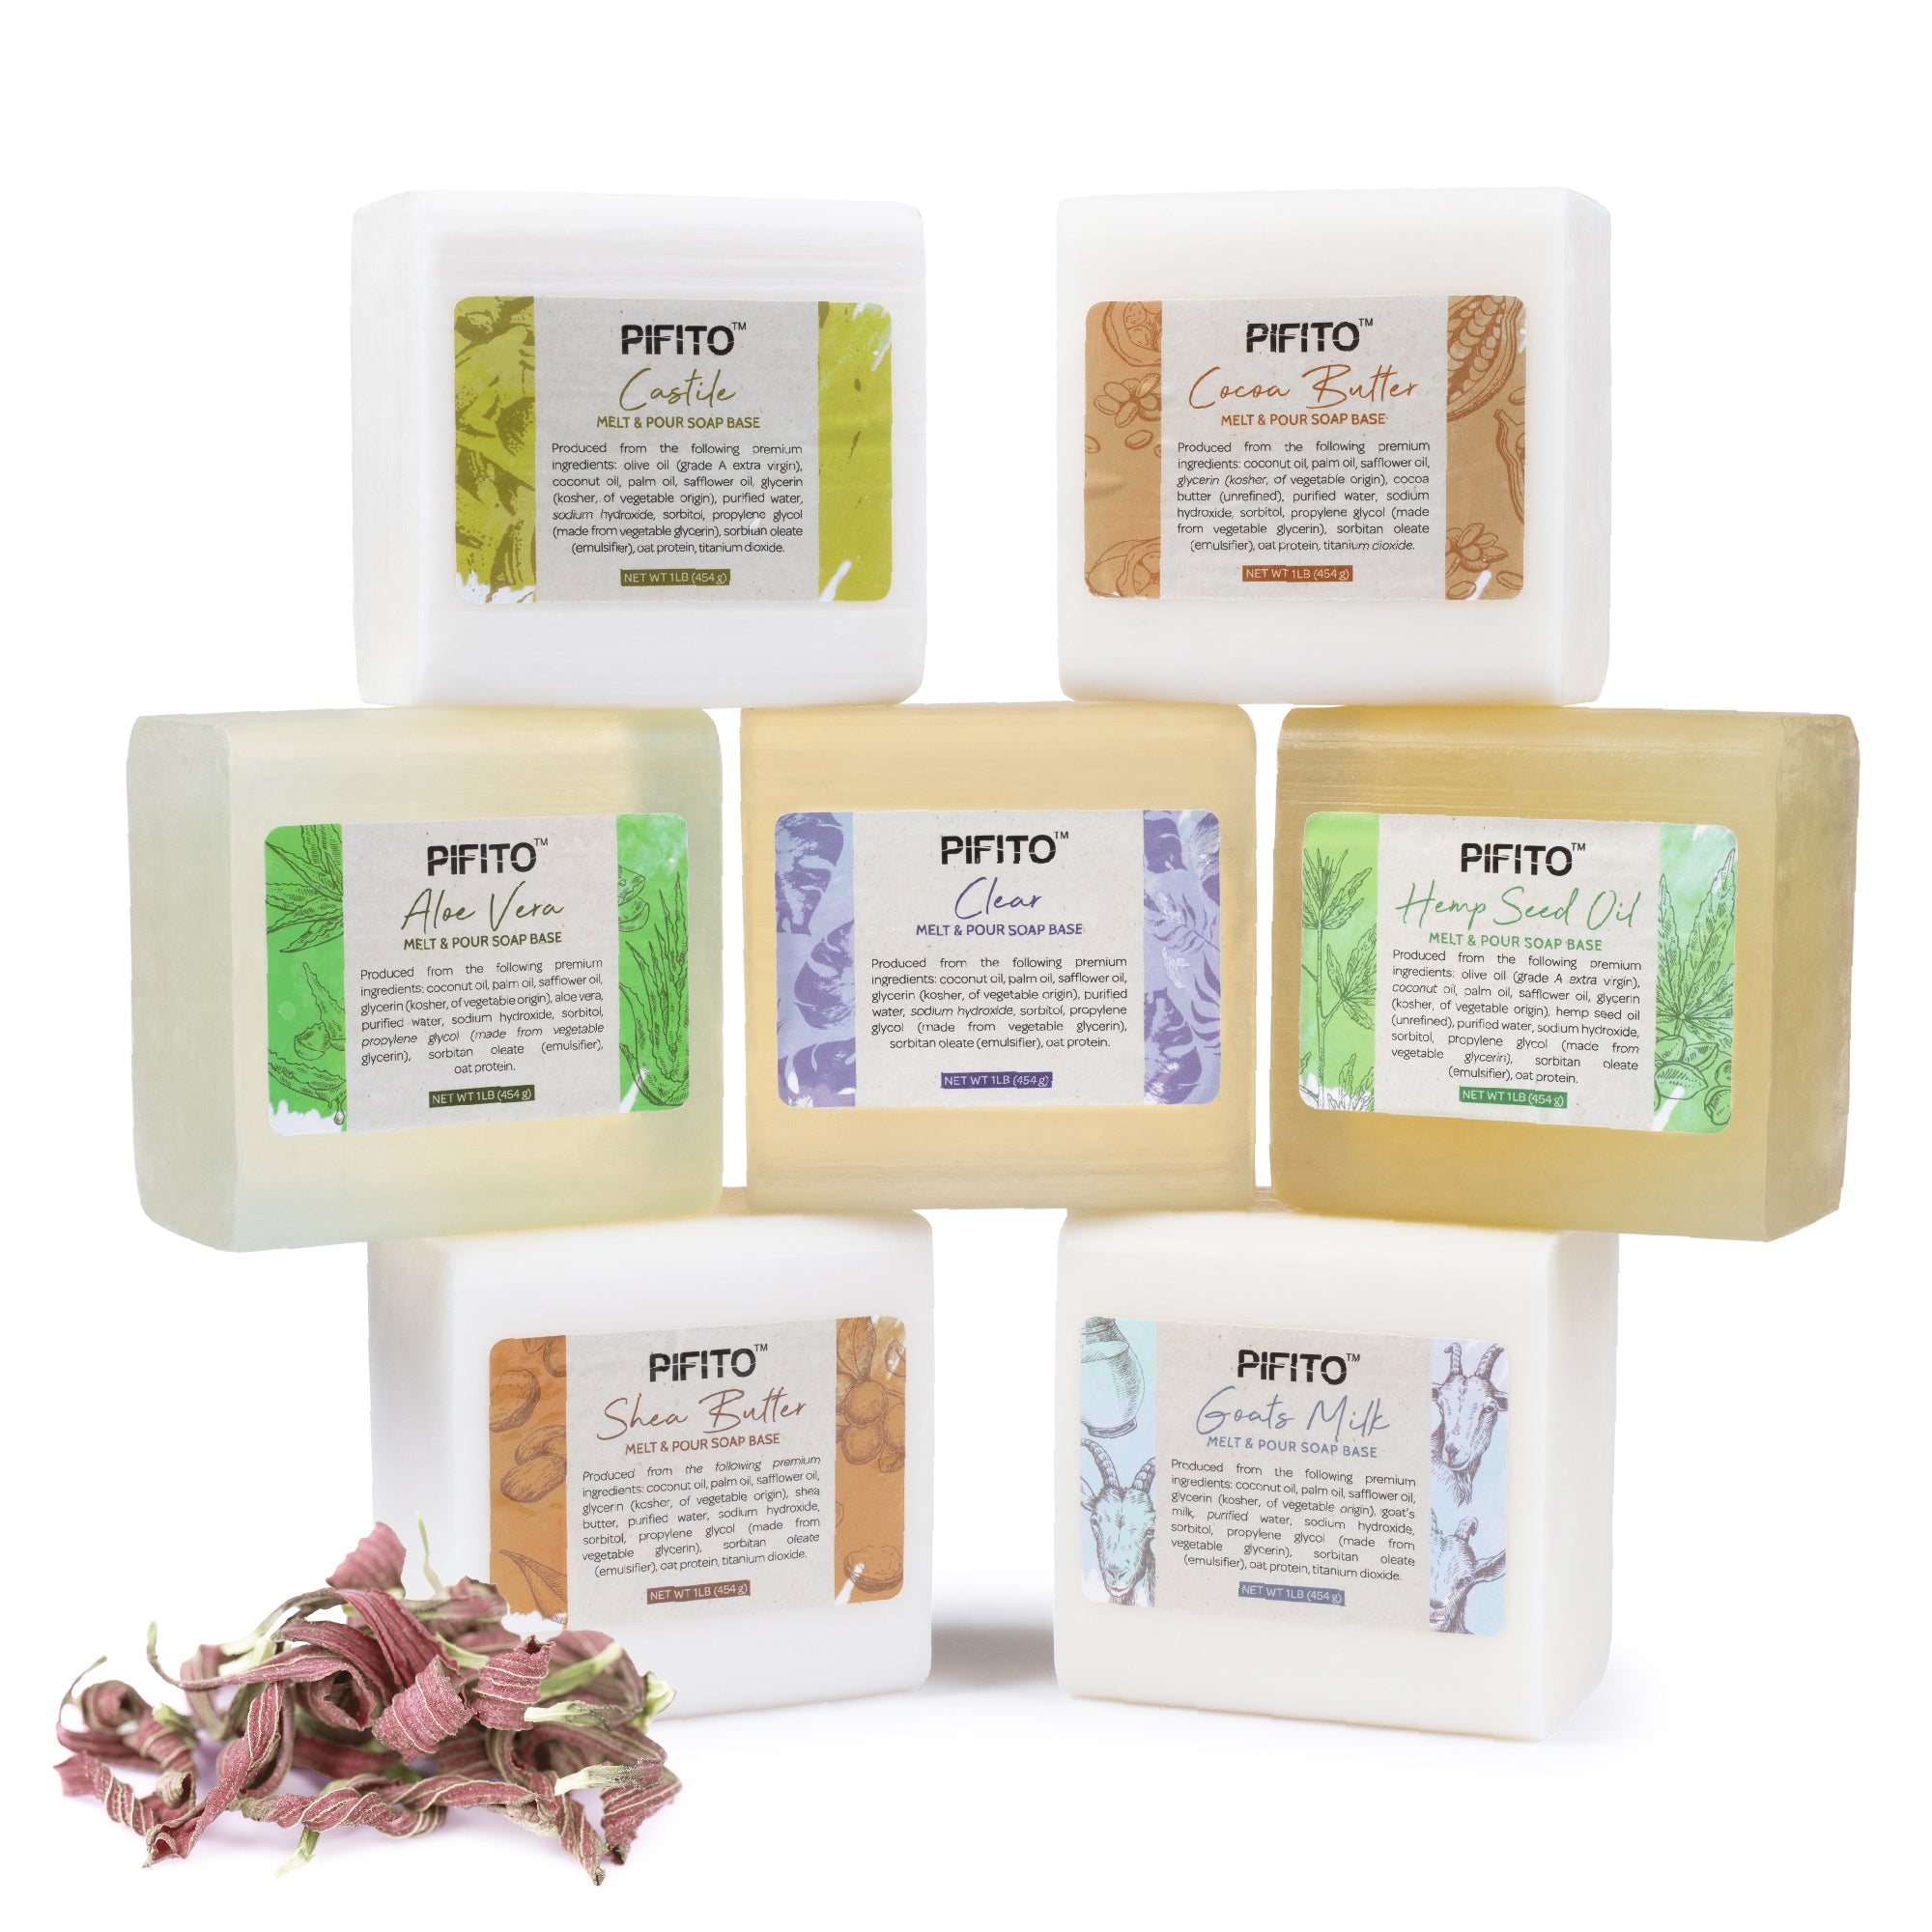 23 Lb MELT AND POUR Soap Variety Sampler Pack 100% All Natural